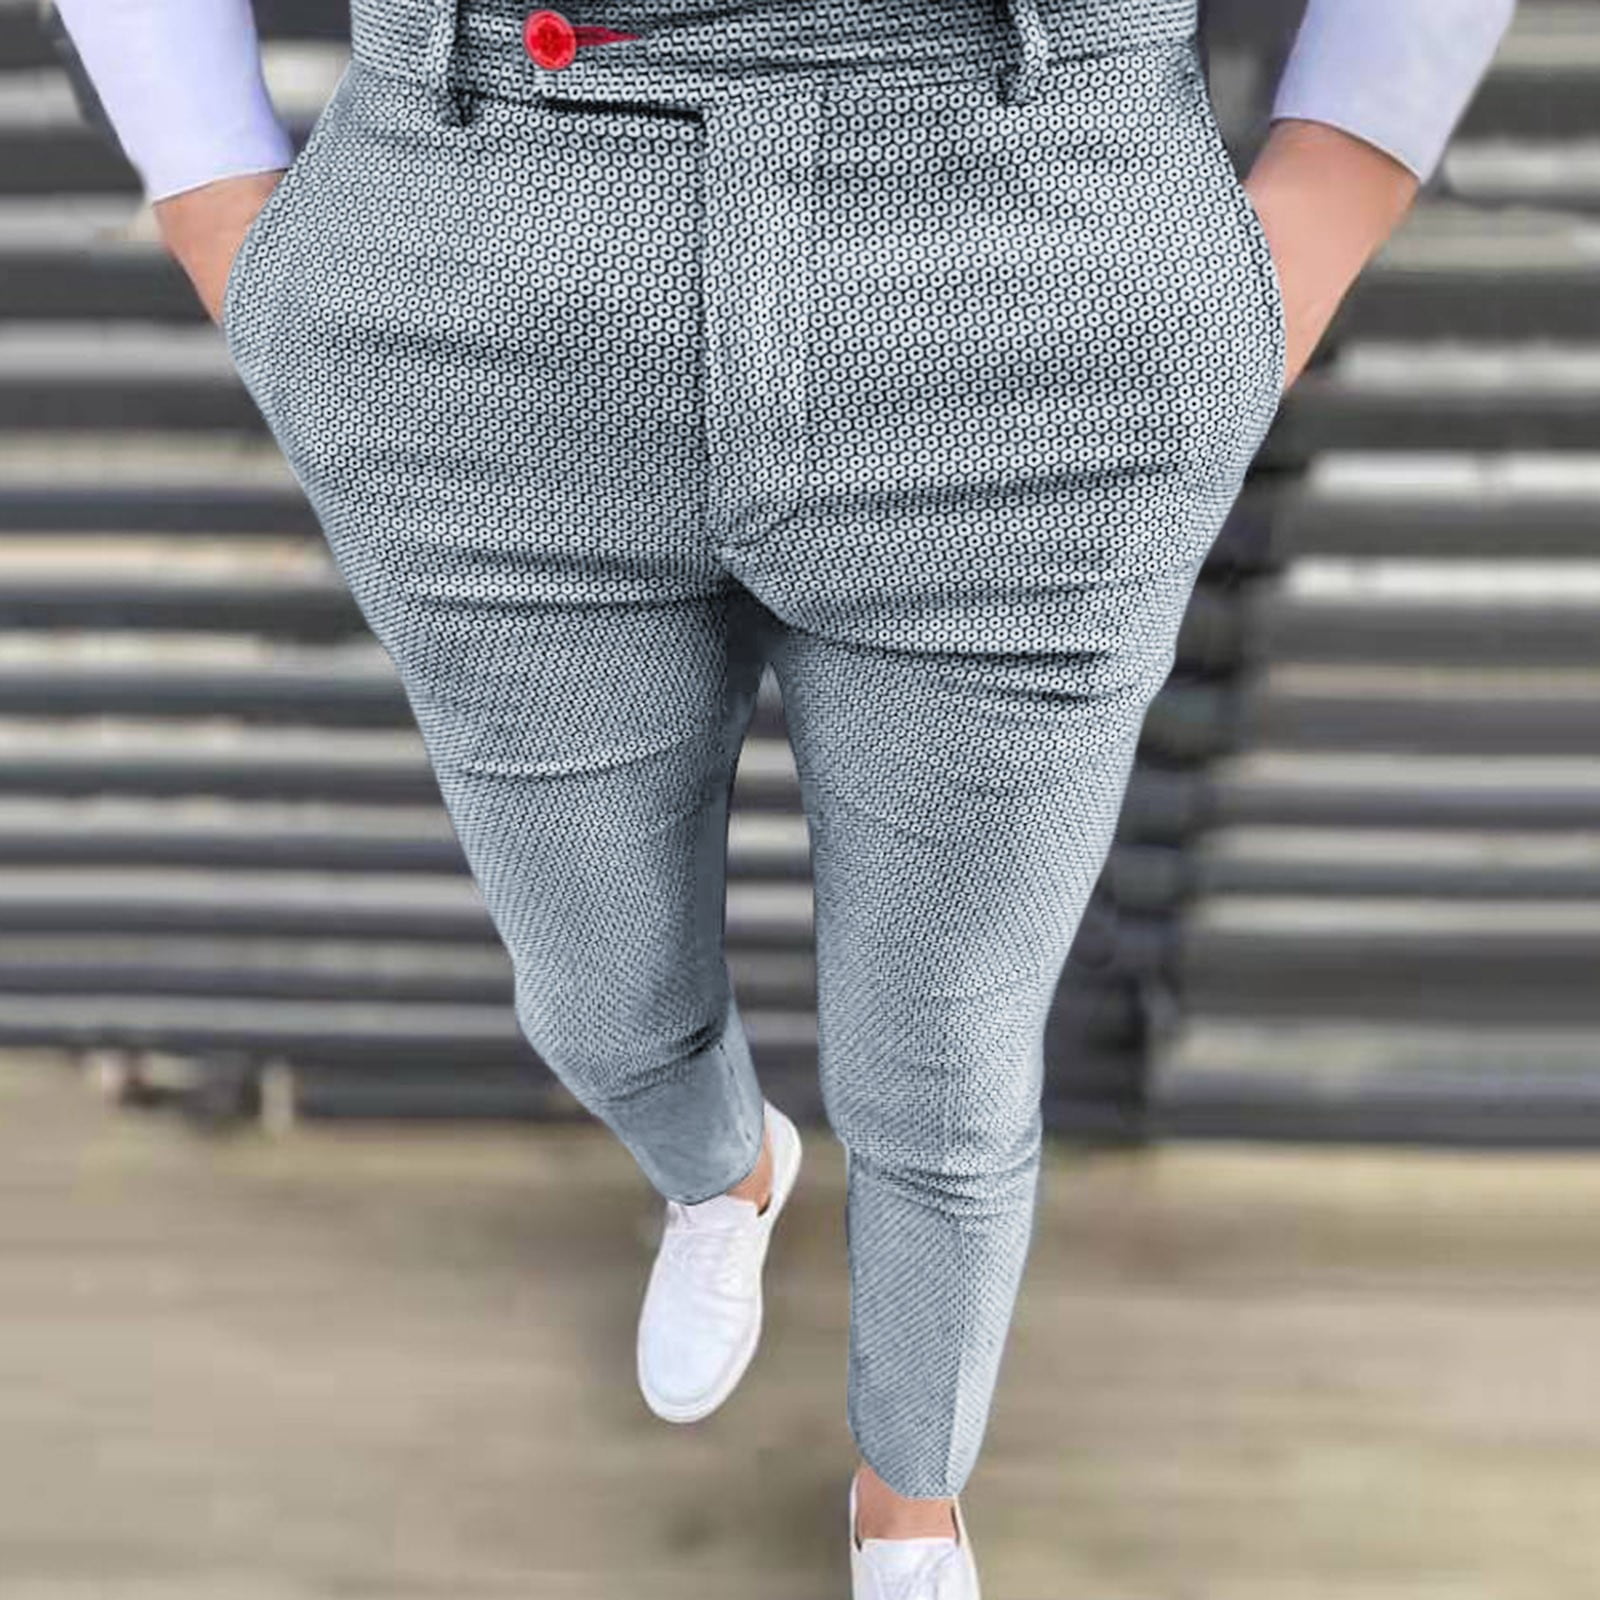 Men's Fashion Plaid Pants Grey & Apple Red - Etsy